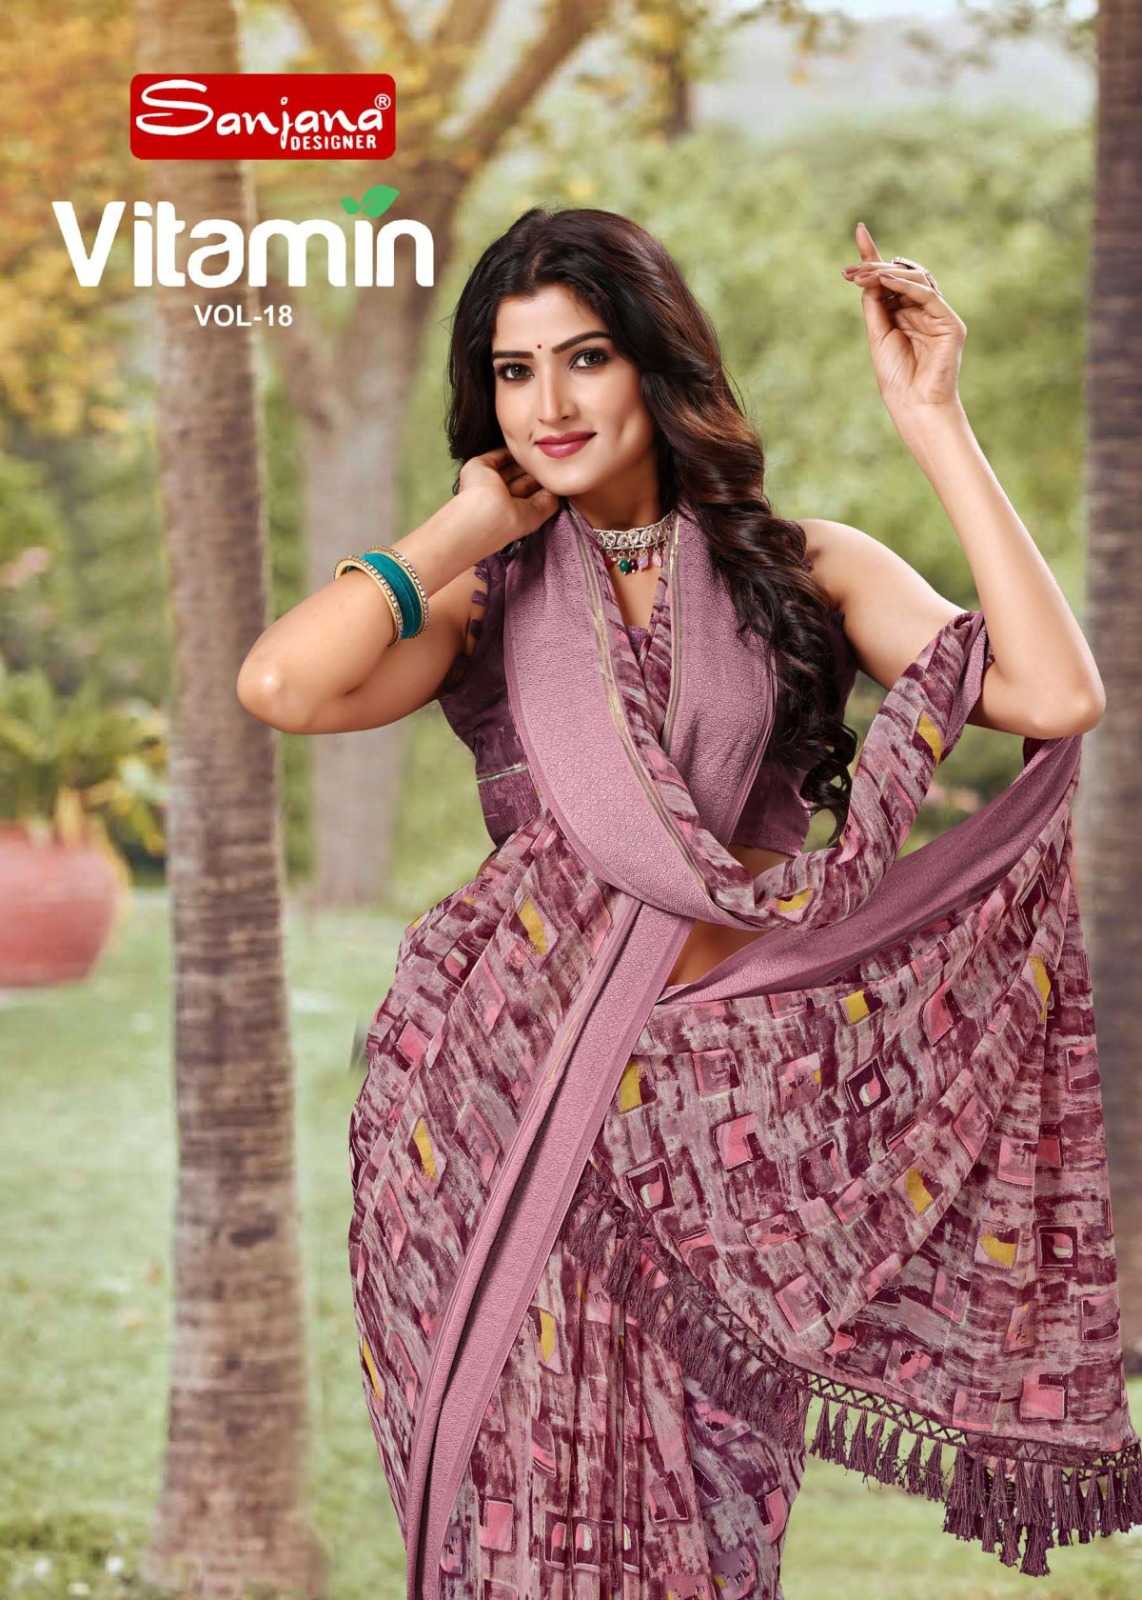 vitamin vol 18 by sanjana designer fancy amazing weightless sarees 